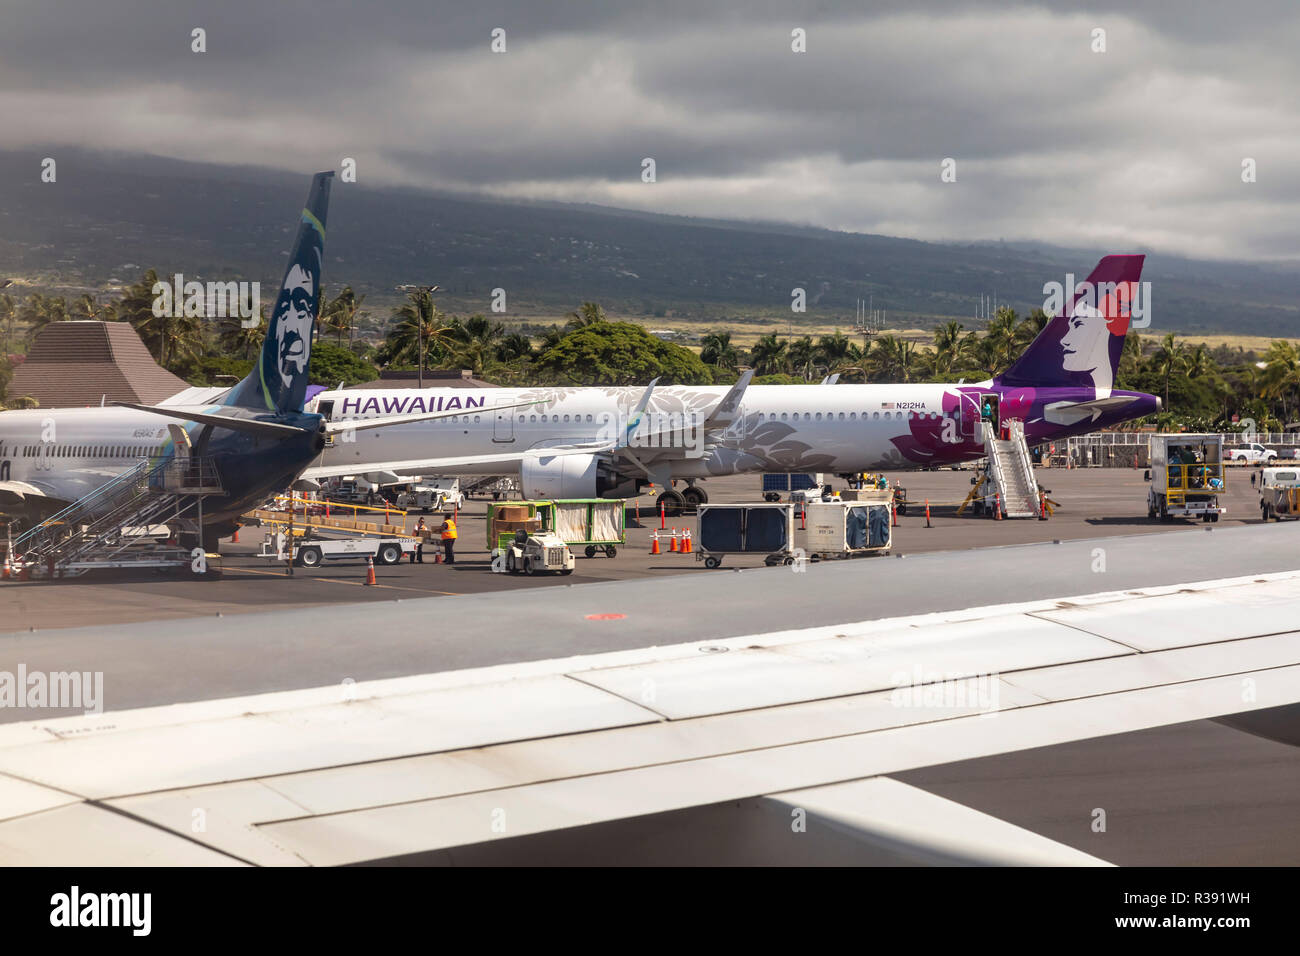 Kailua-Kona, Hawaii - Alaska Airlines und Hawaiian Airlines Jet Flieger auf der Rollbahn am internationalen Flughafen Kona auf Hawaii Big Island. Stockfoto